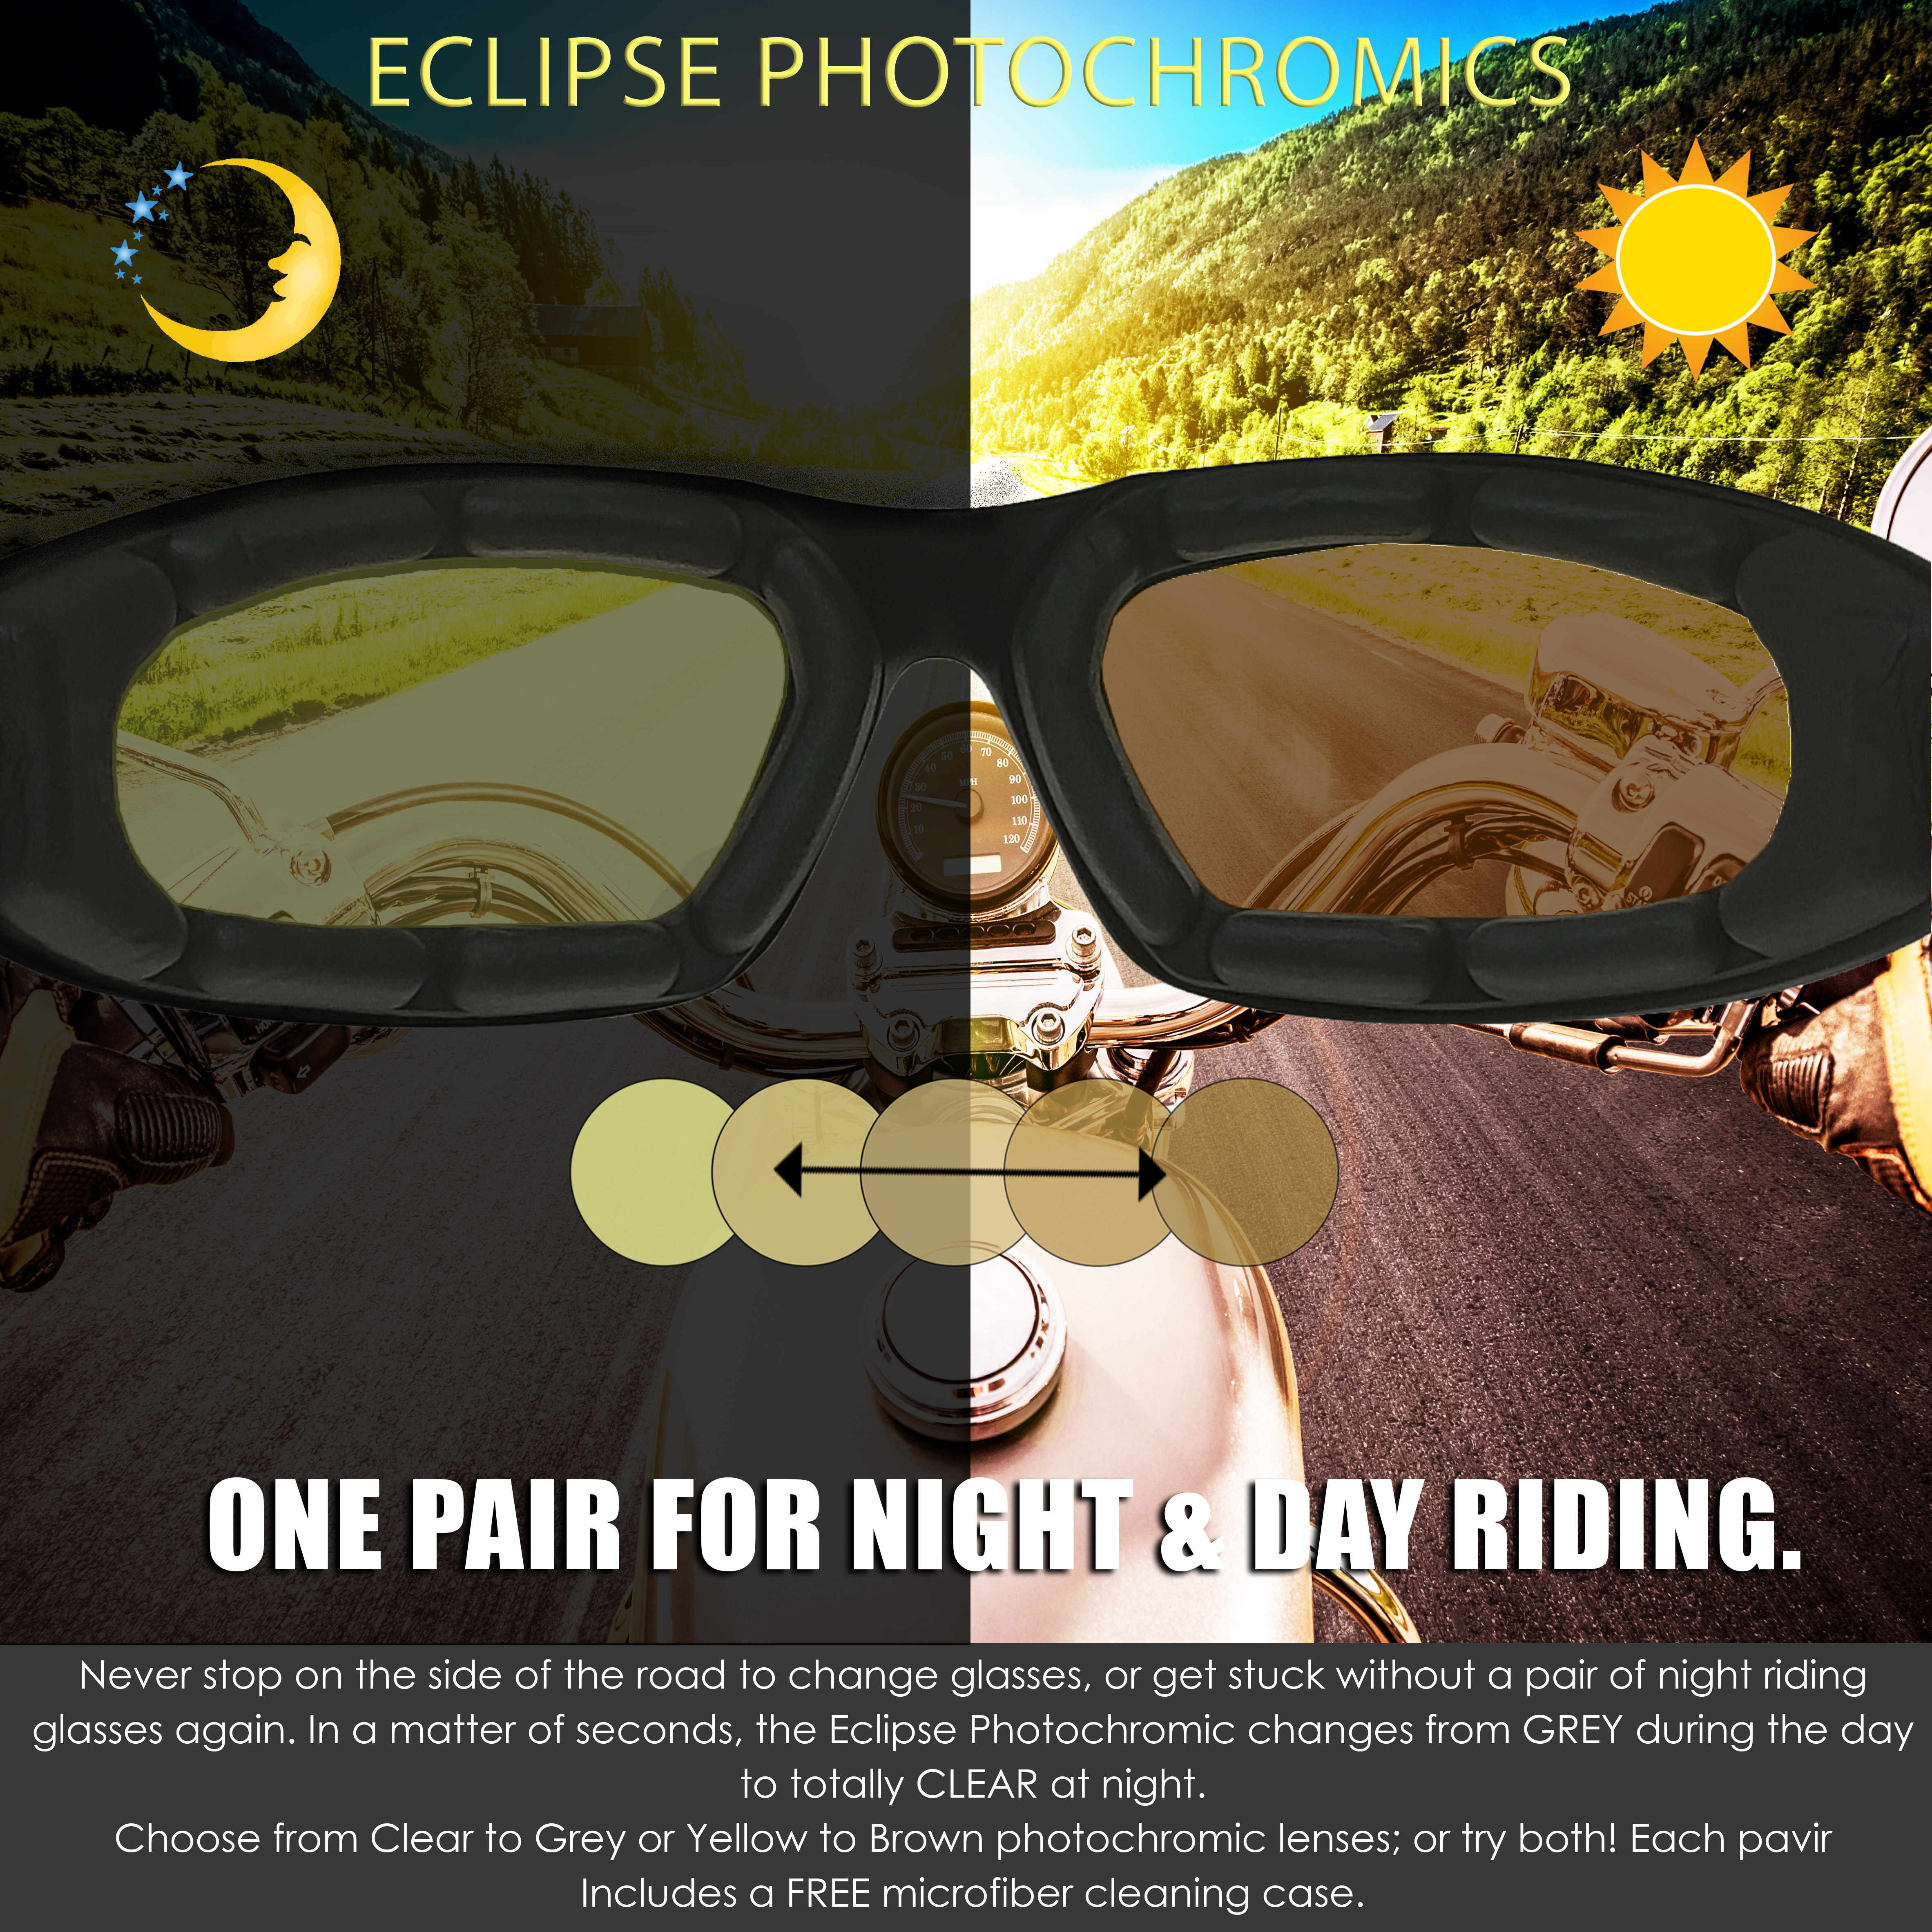 Bikershades Motorcycle Transitional Sunglass Day Night Riding Photochromic Purple Yellow - image 5 of 6